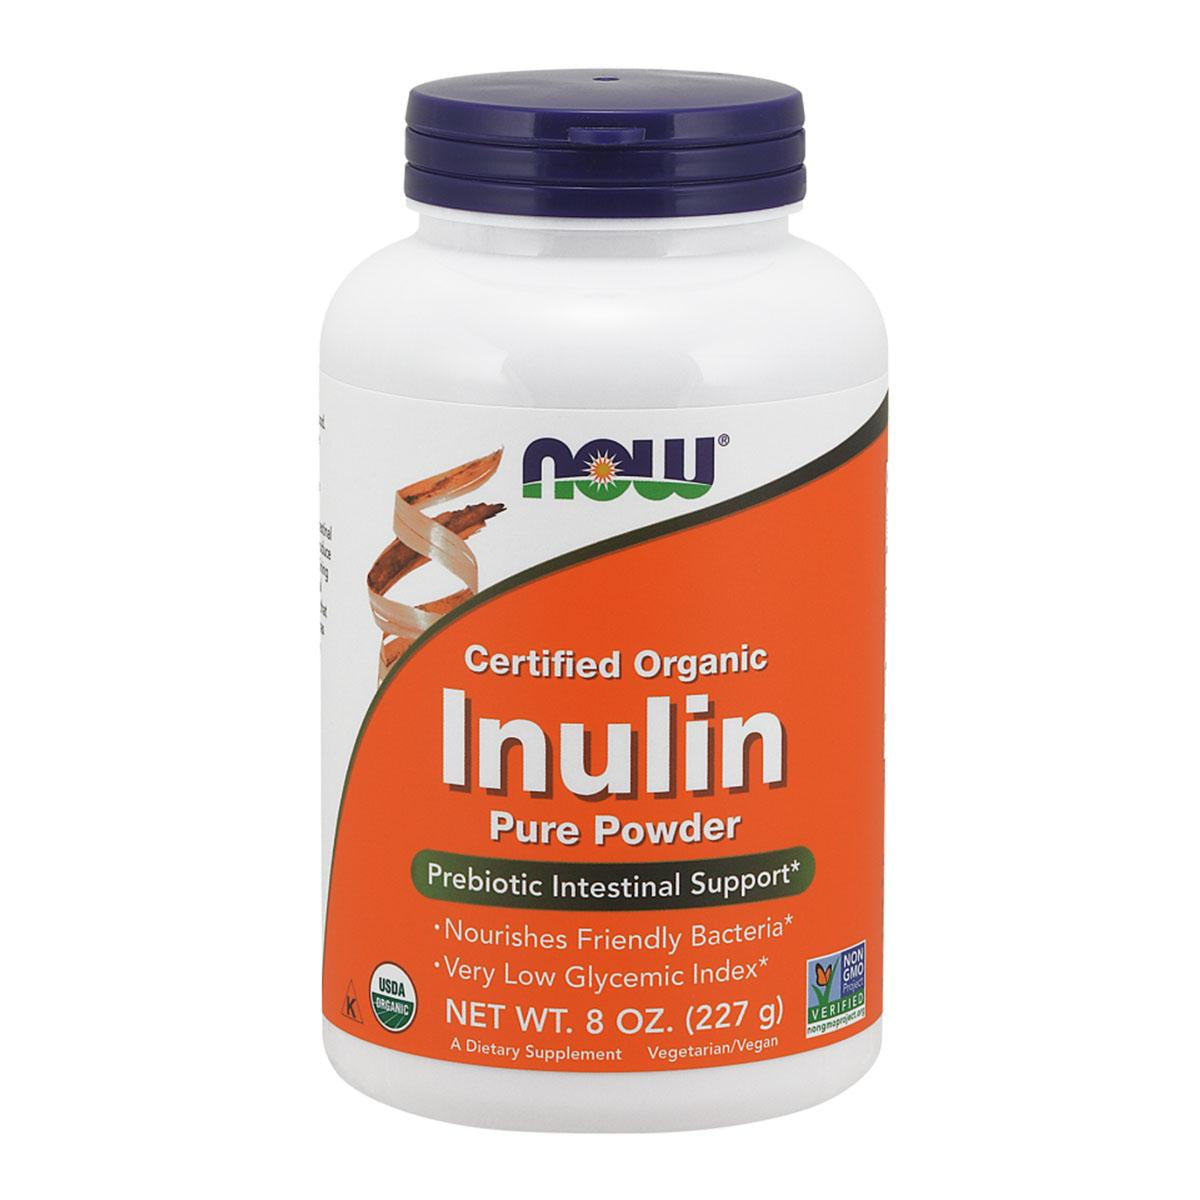 Primary image of Inulin Powder (Organic)_